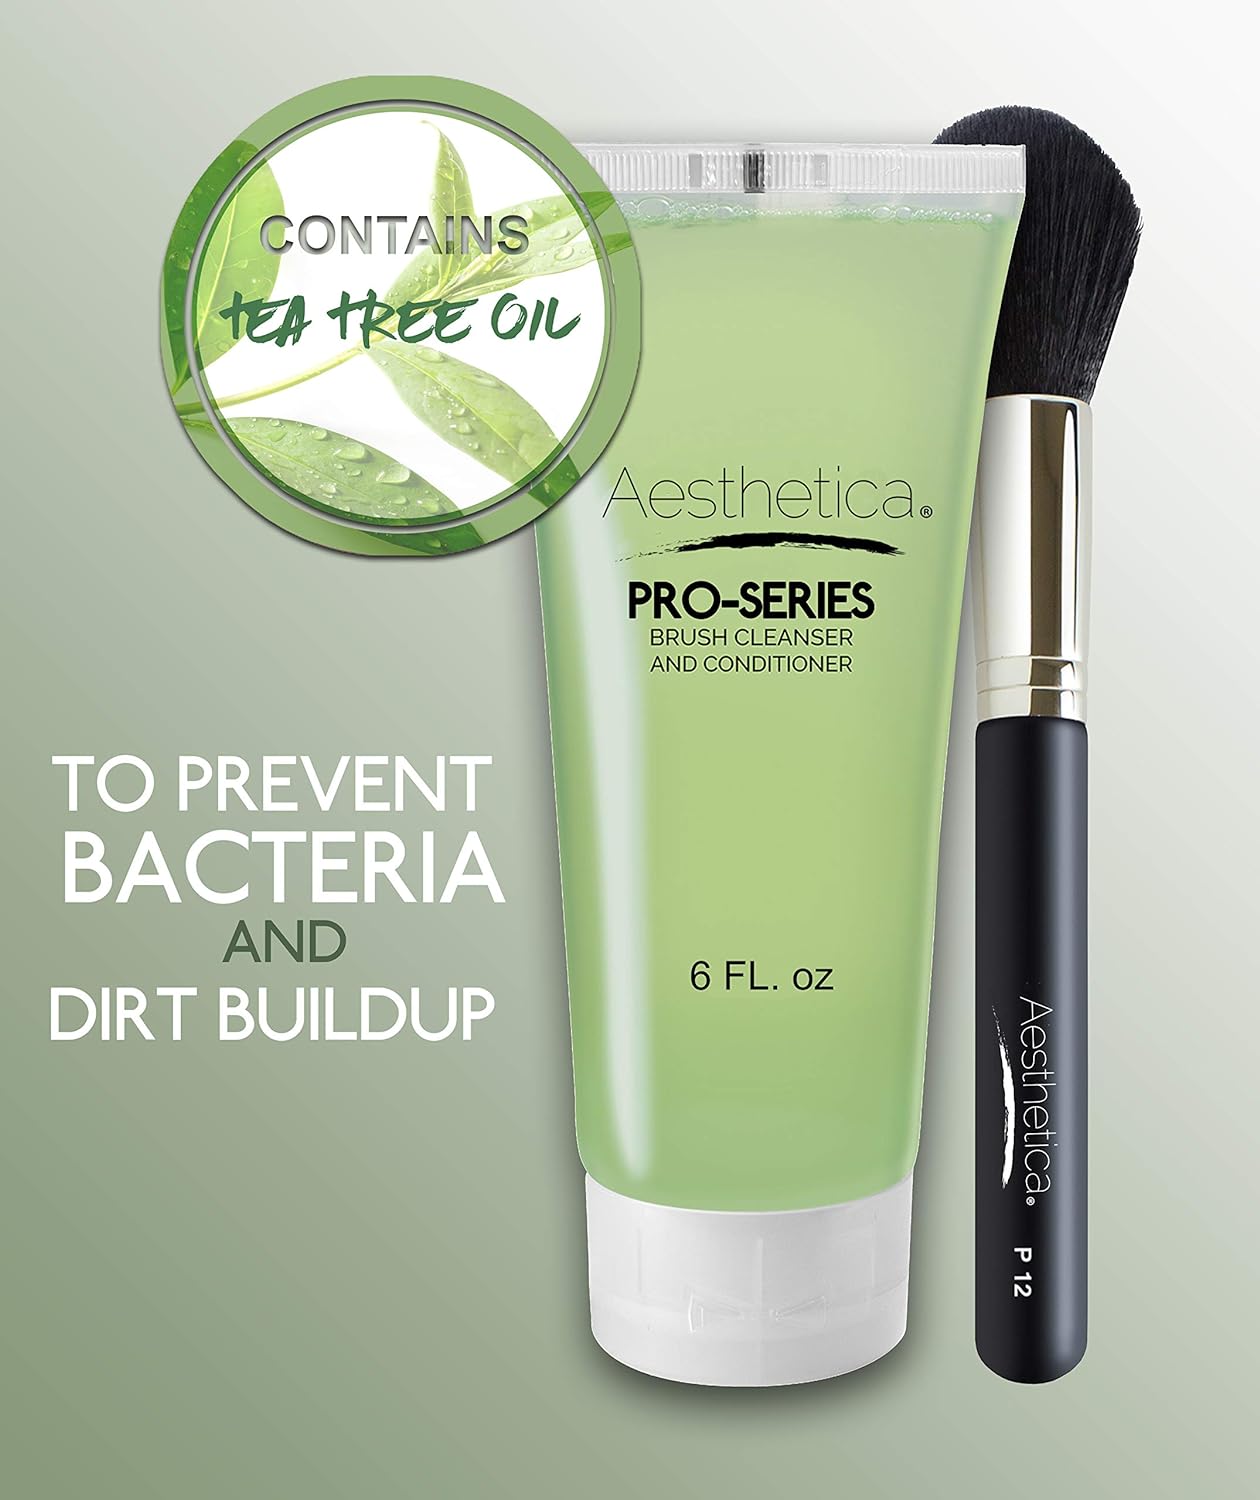  Aesthetica Makeup Brush Cleaner - Cruelty Free Make Up Brush Shampoo for any Brush, Sponge or Applicator - Made in USA - 6 oz.